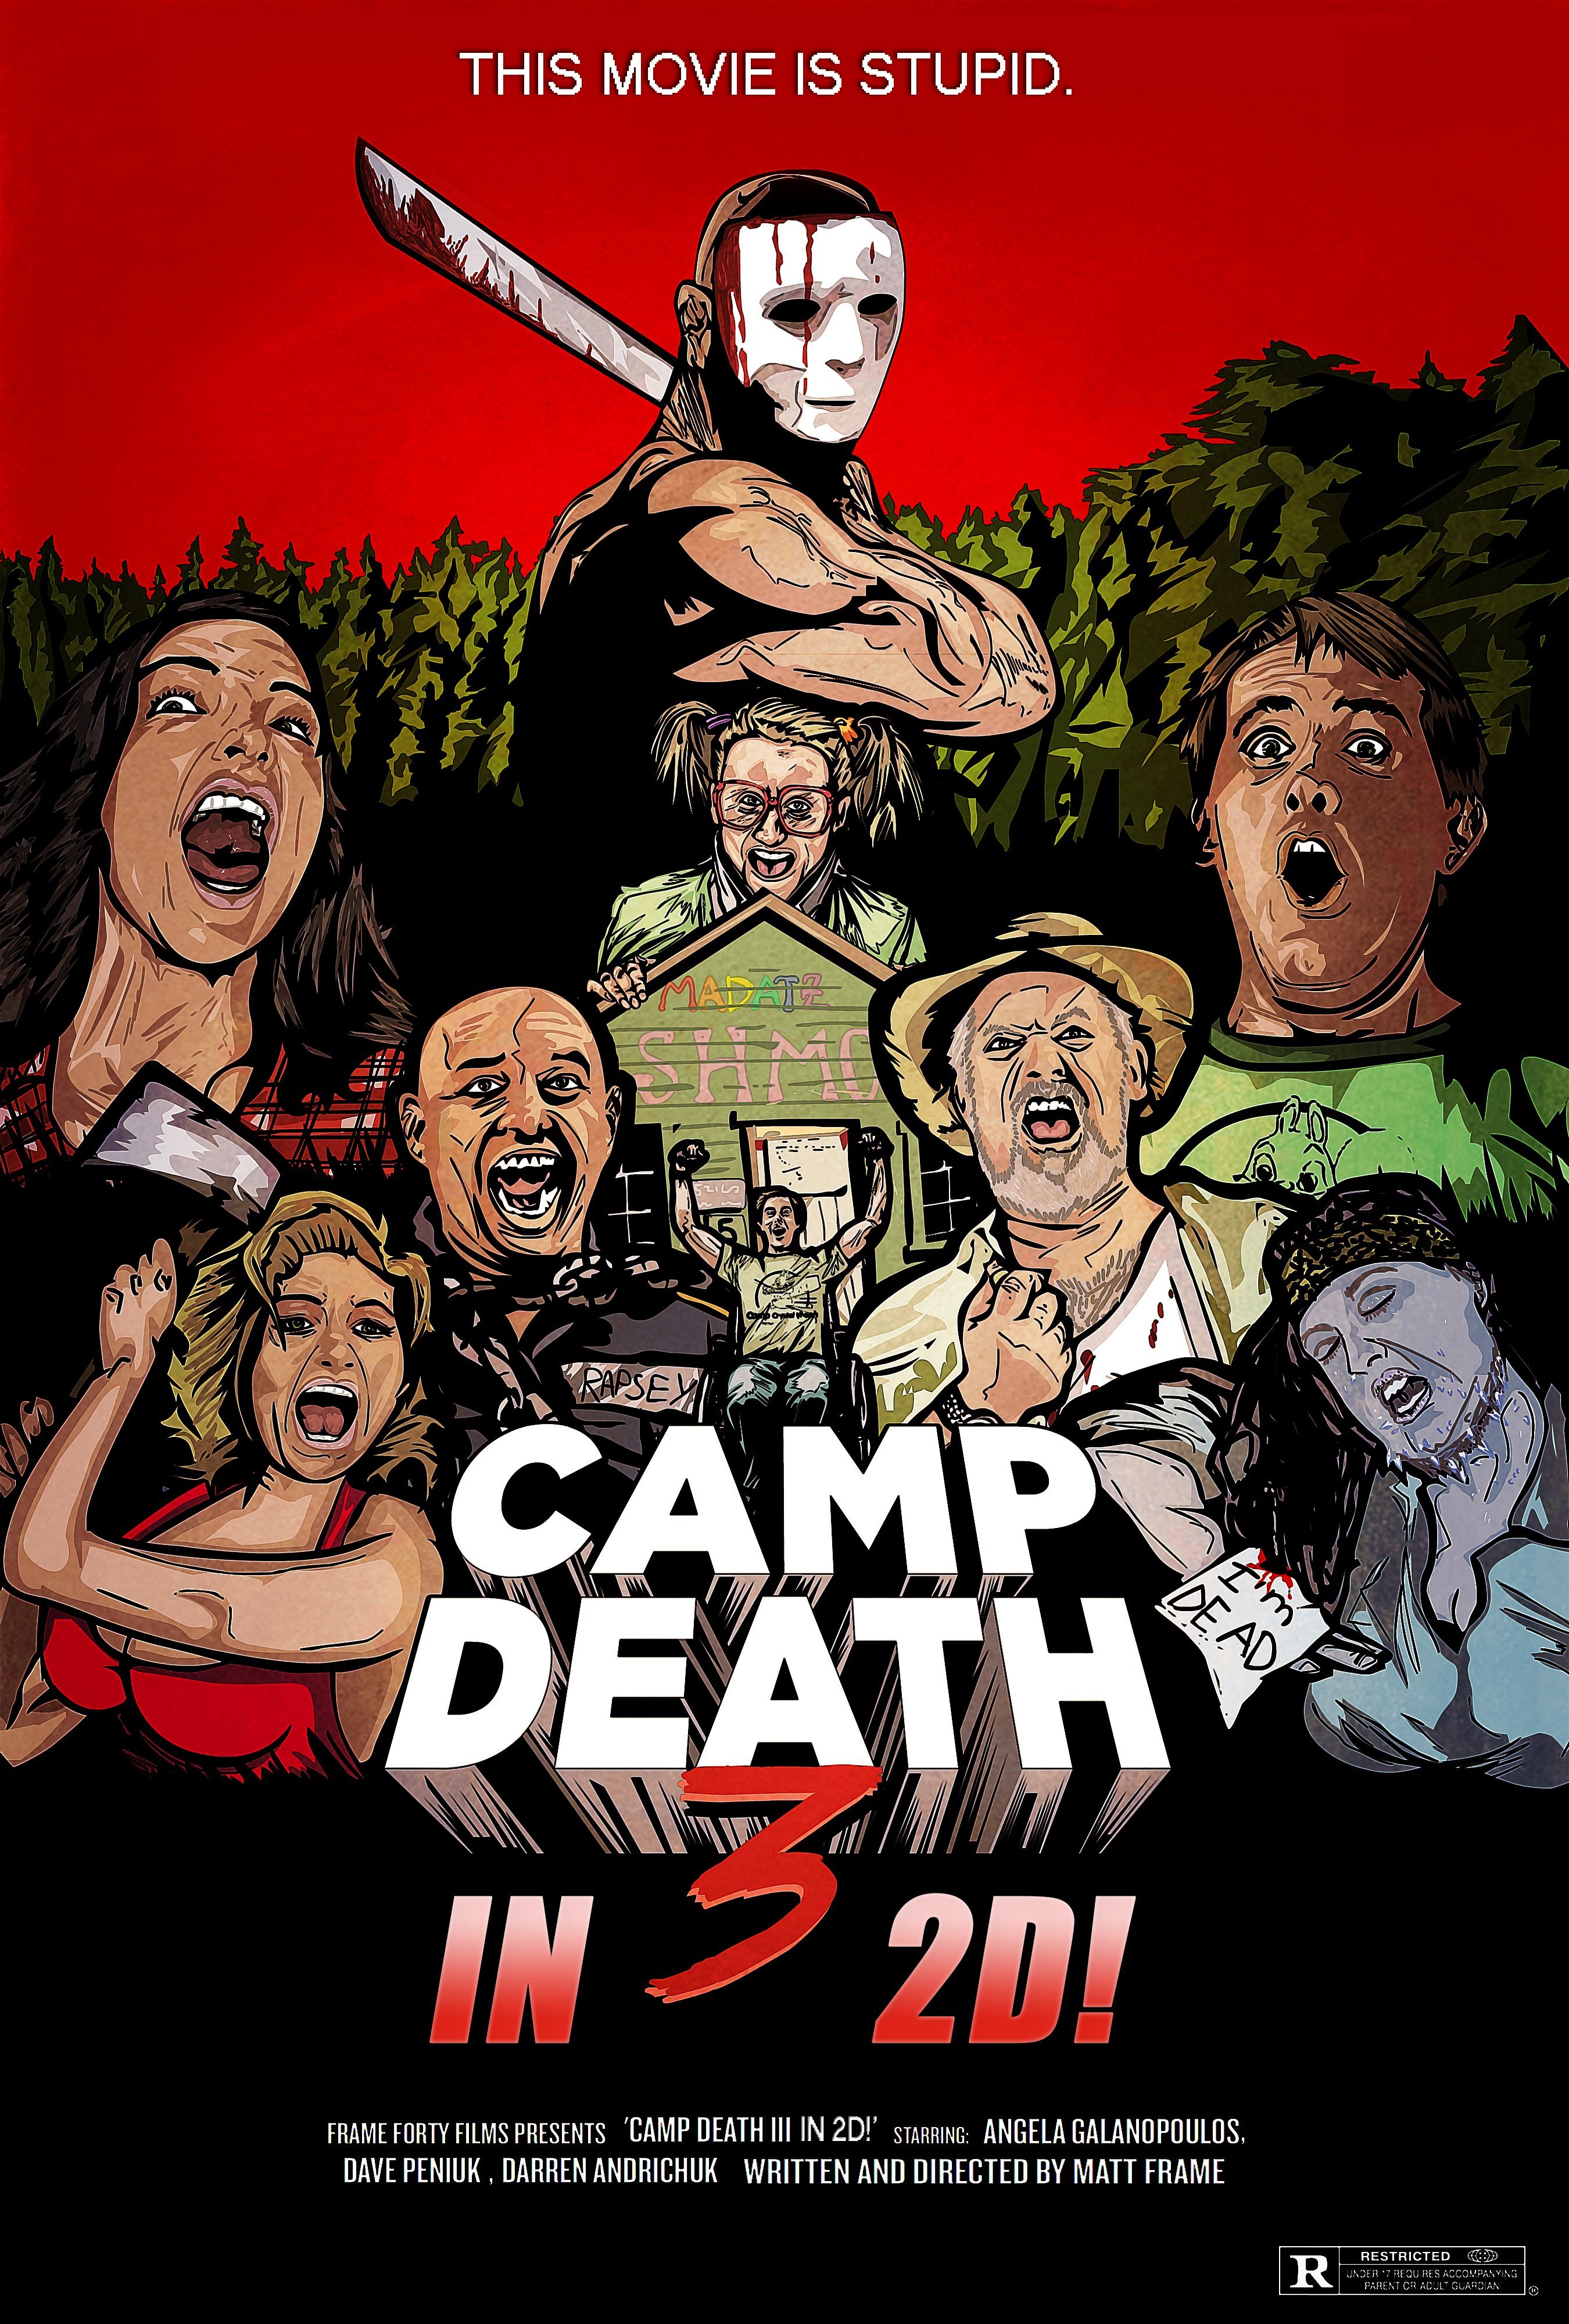 CAMP DEATH 3 IN 2D!